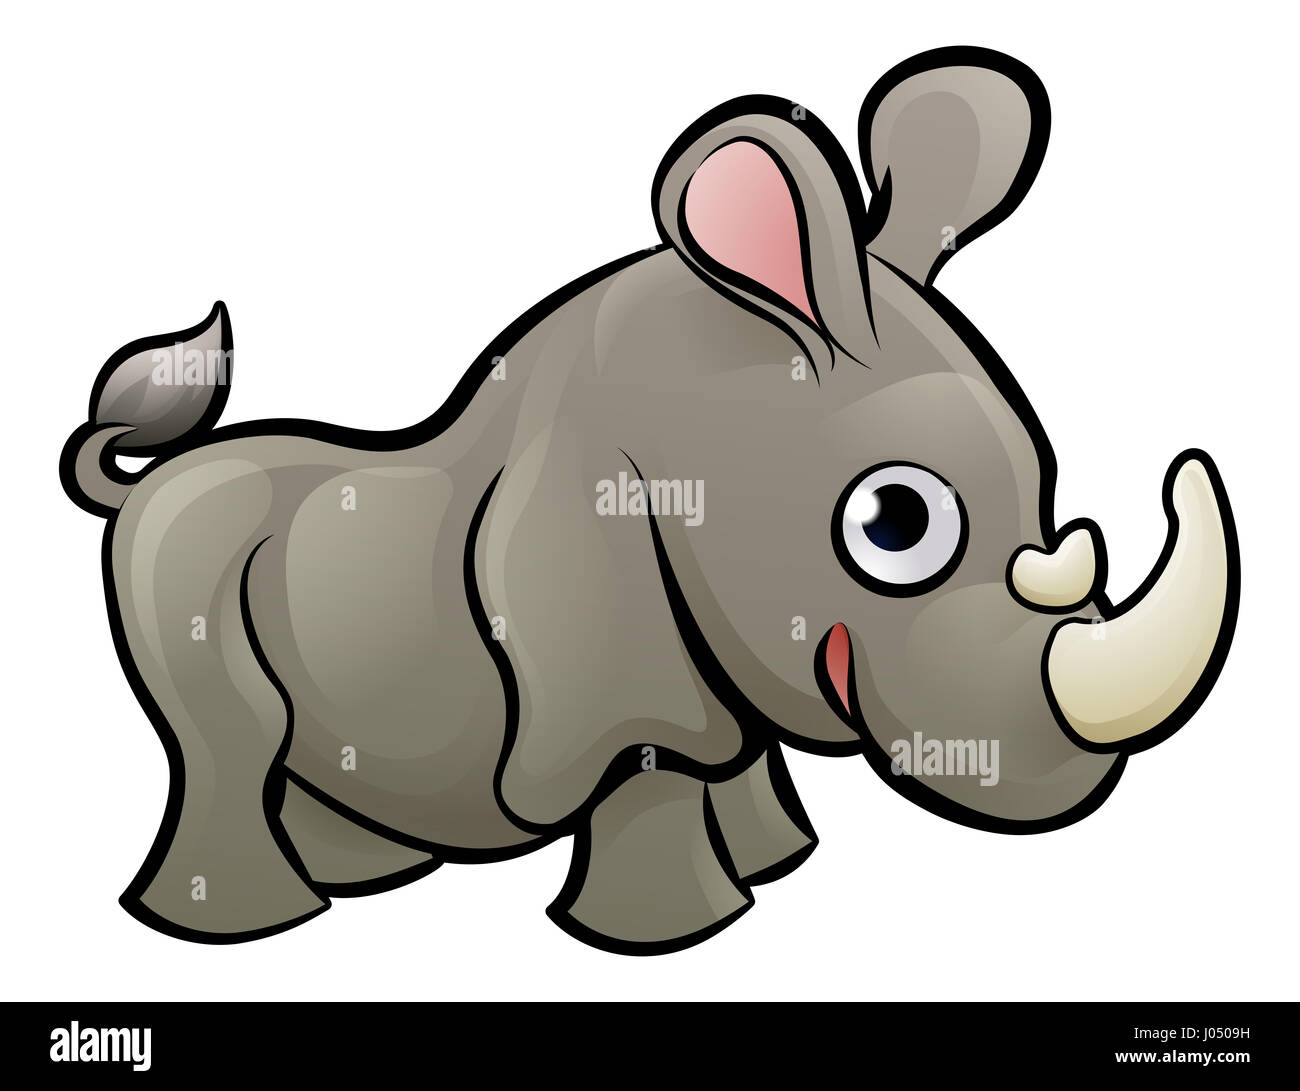 A rhino safari animals cartoon character Stock Photo